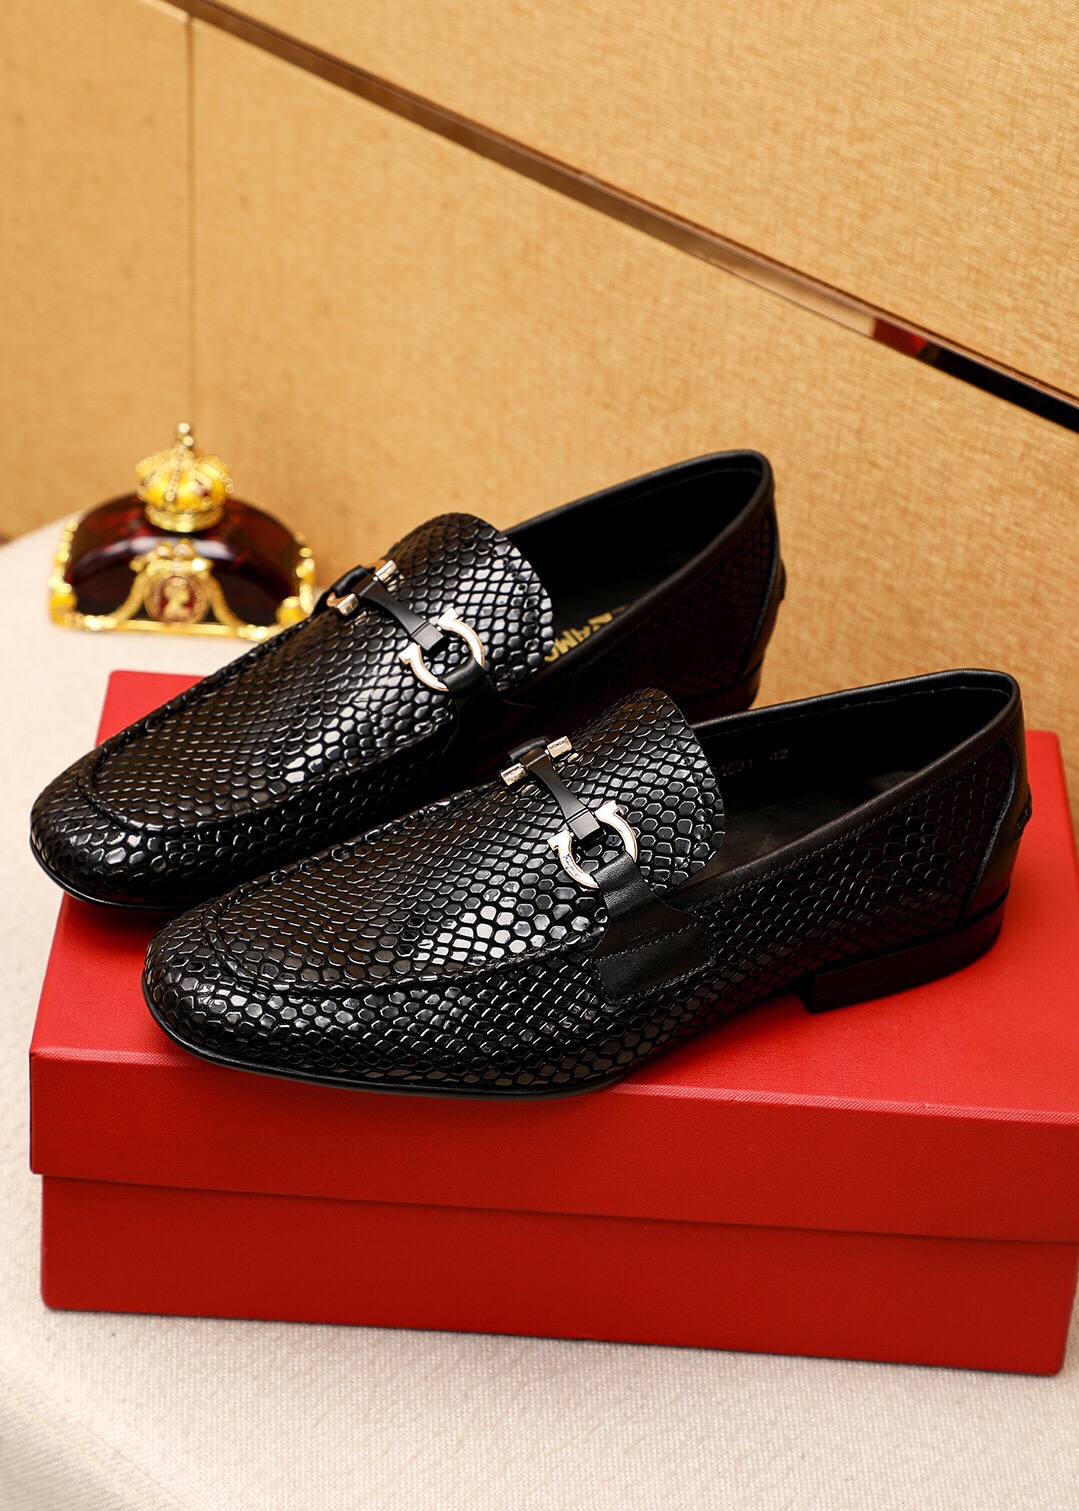 2023 Mens Frade Shoes Casual Slip на дизайнерской туфли мужской бренд Brogue Party Business Flats Chaussure Homme размер 38-45